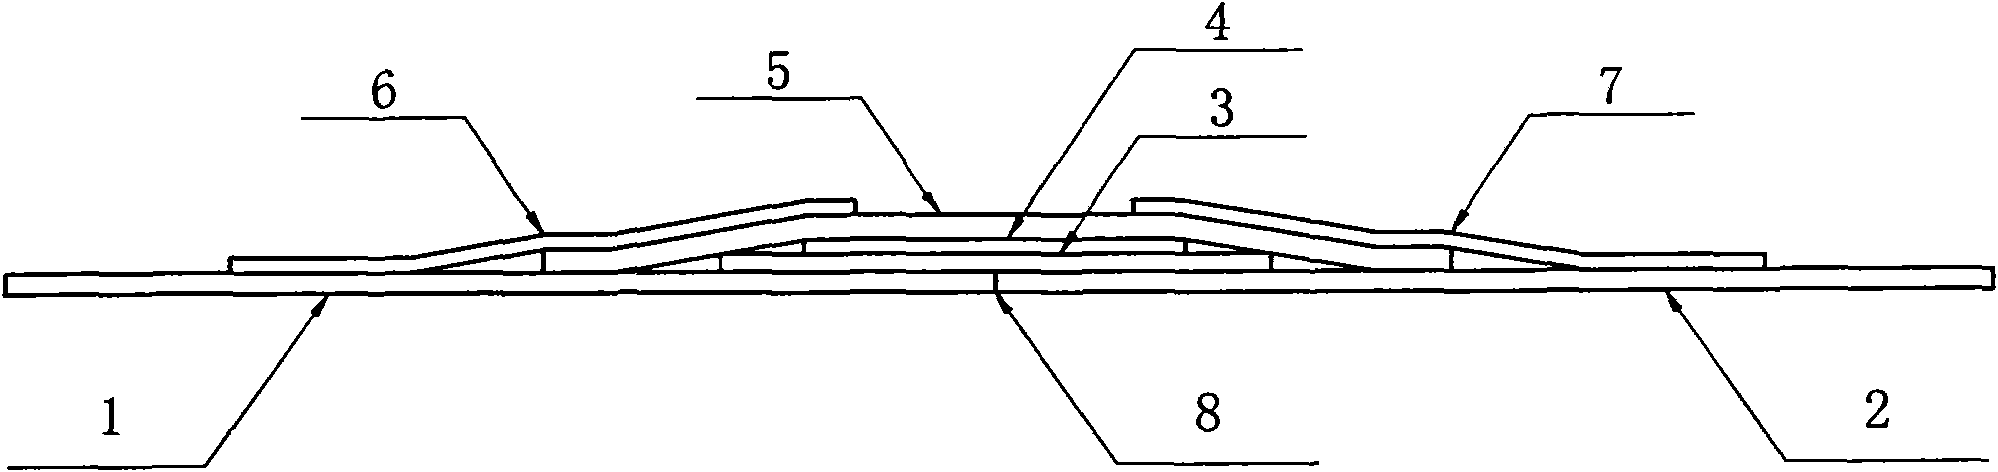 Plate splicing process of laser nickel plates